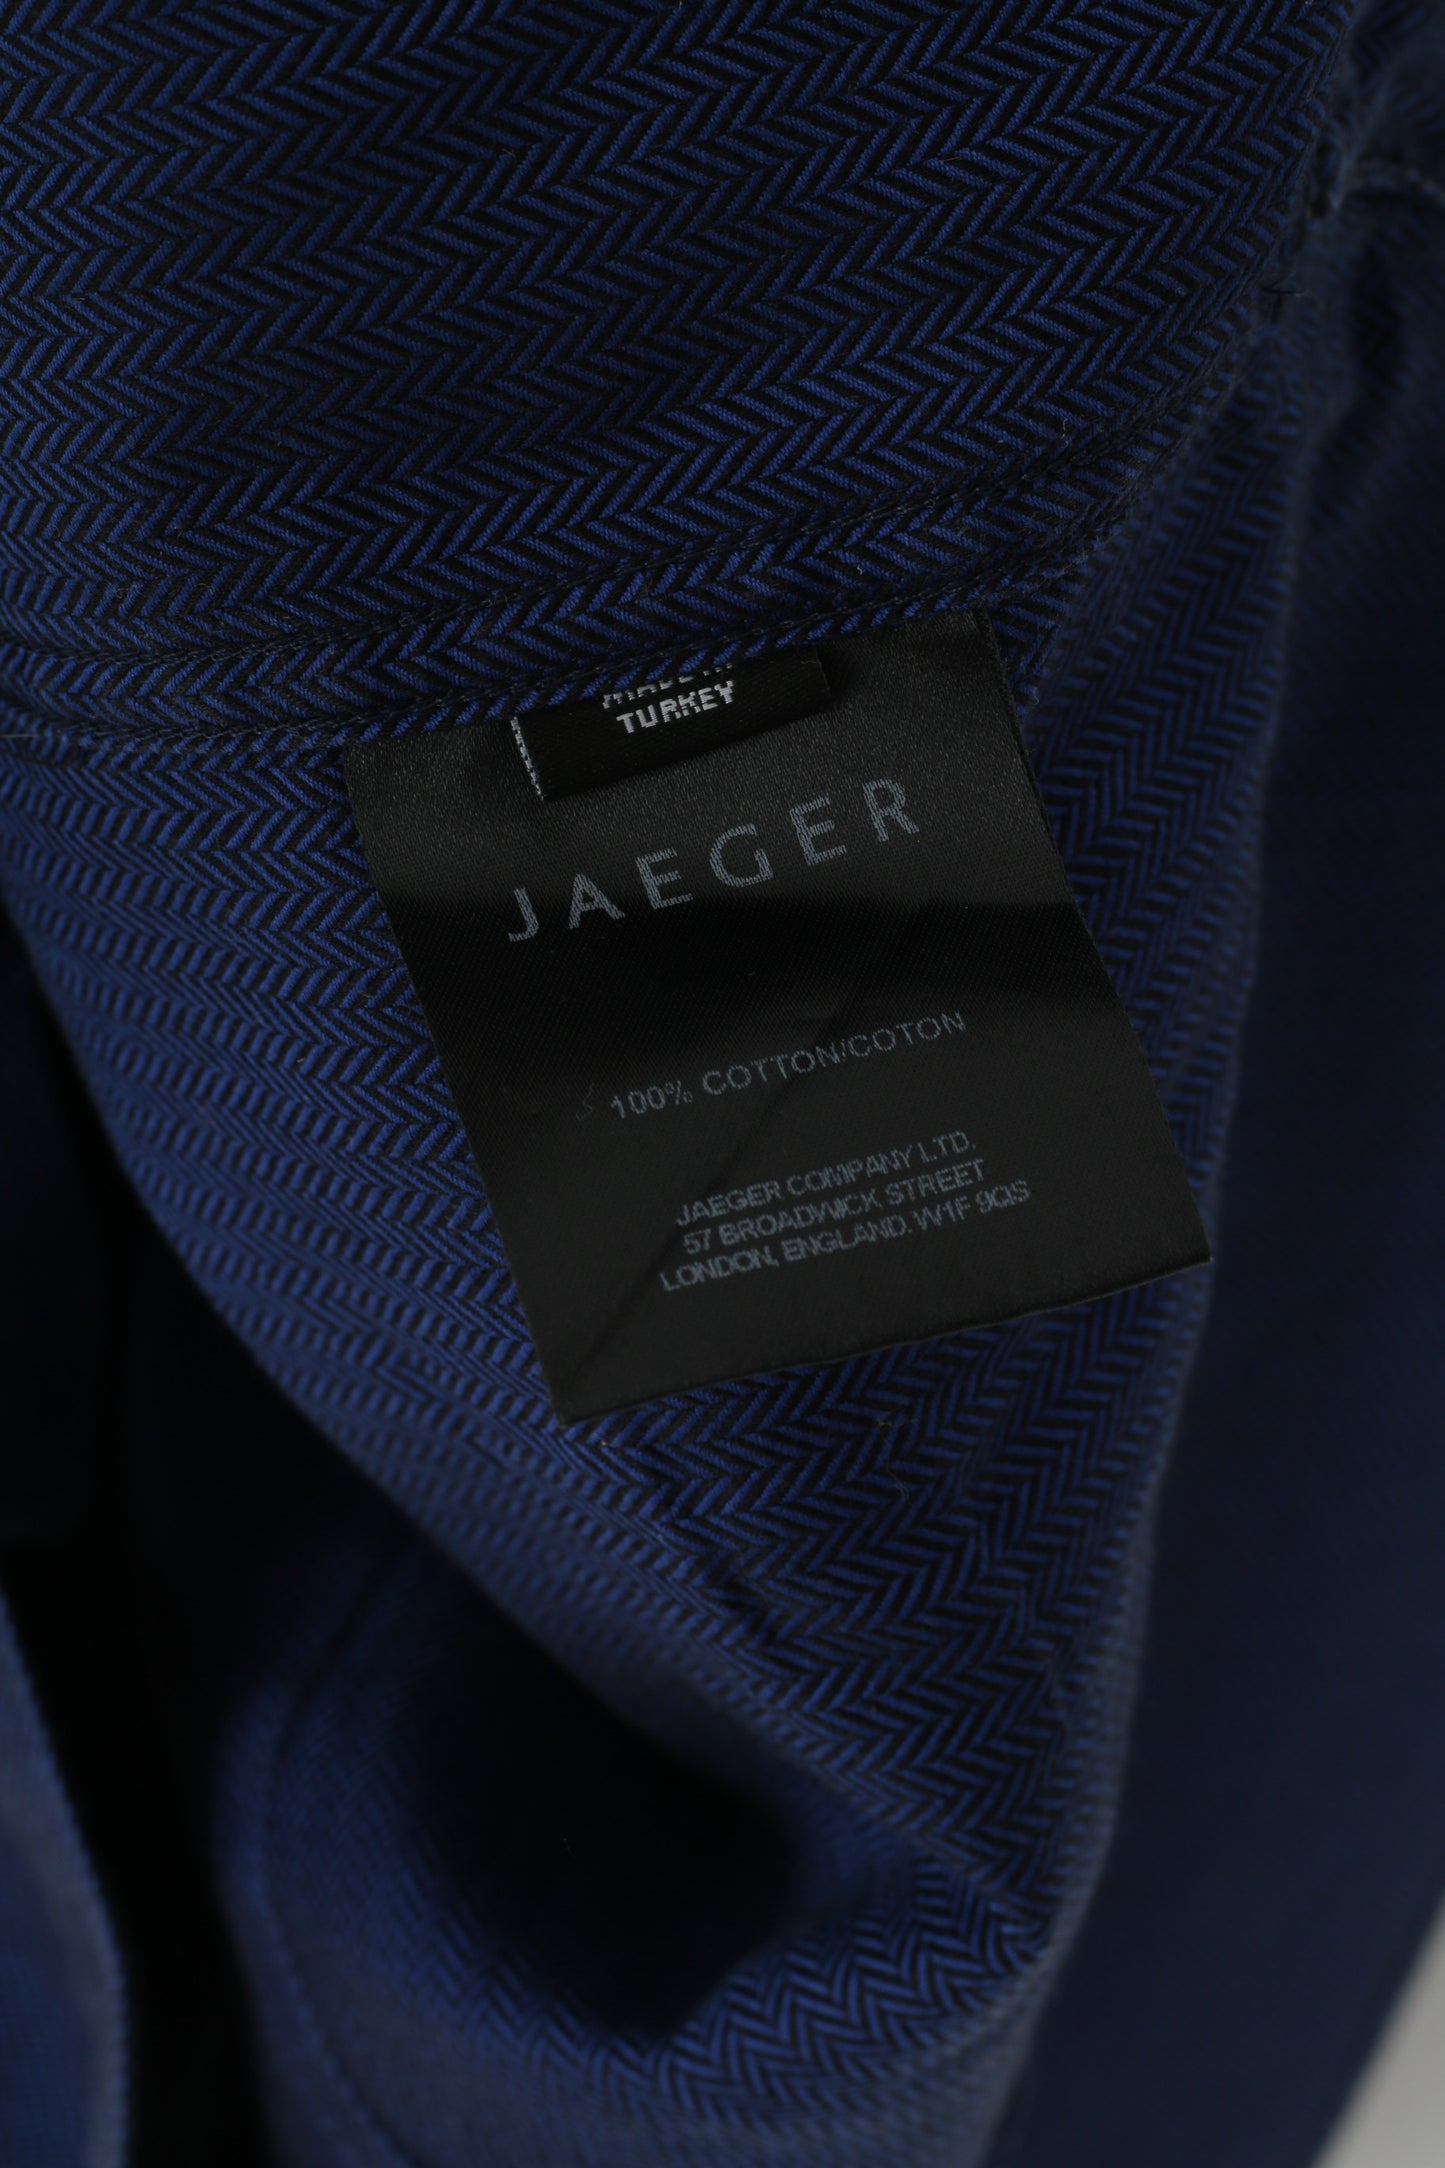 Jaeger Men 17.5 L Casual Shirt Navy Herringbone Cotton Long Sleeve Top